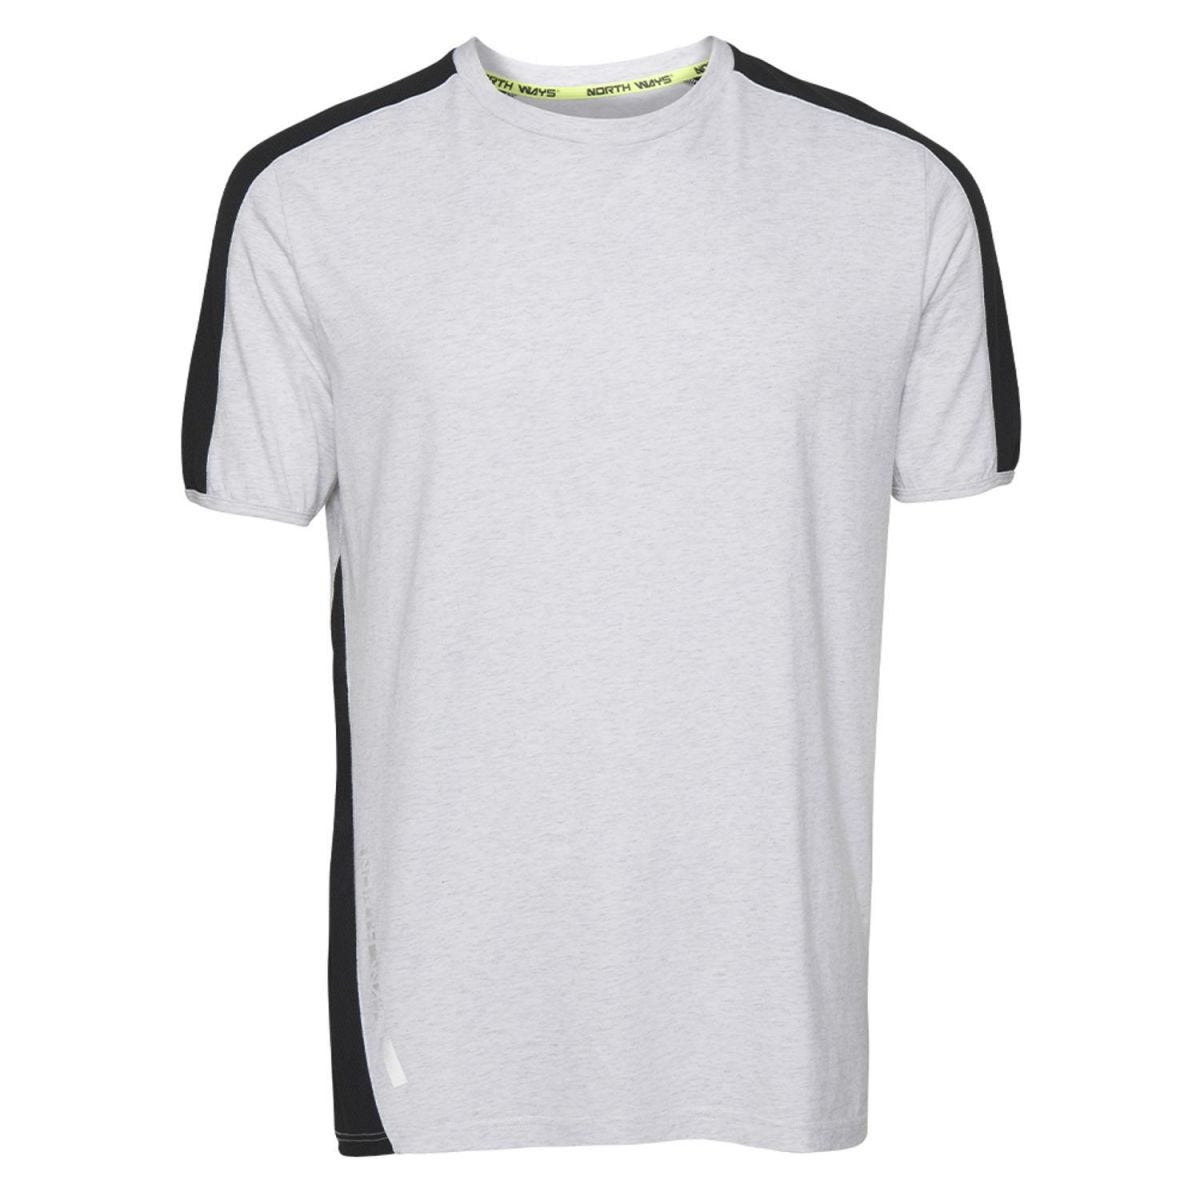 Tee-shirt à manches courtes pour homme Andy blanc chiné - North Ways - Taille L 0